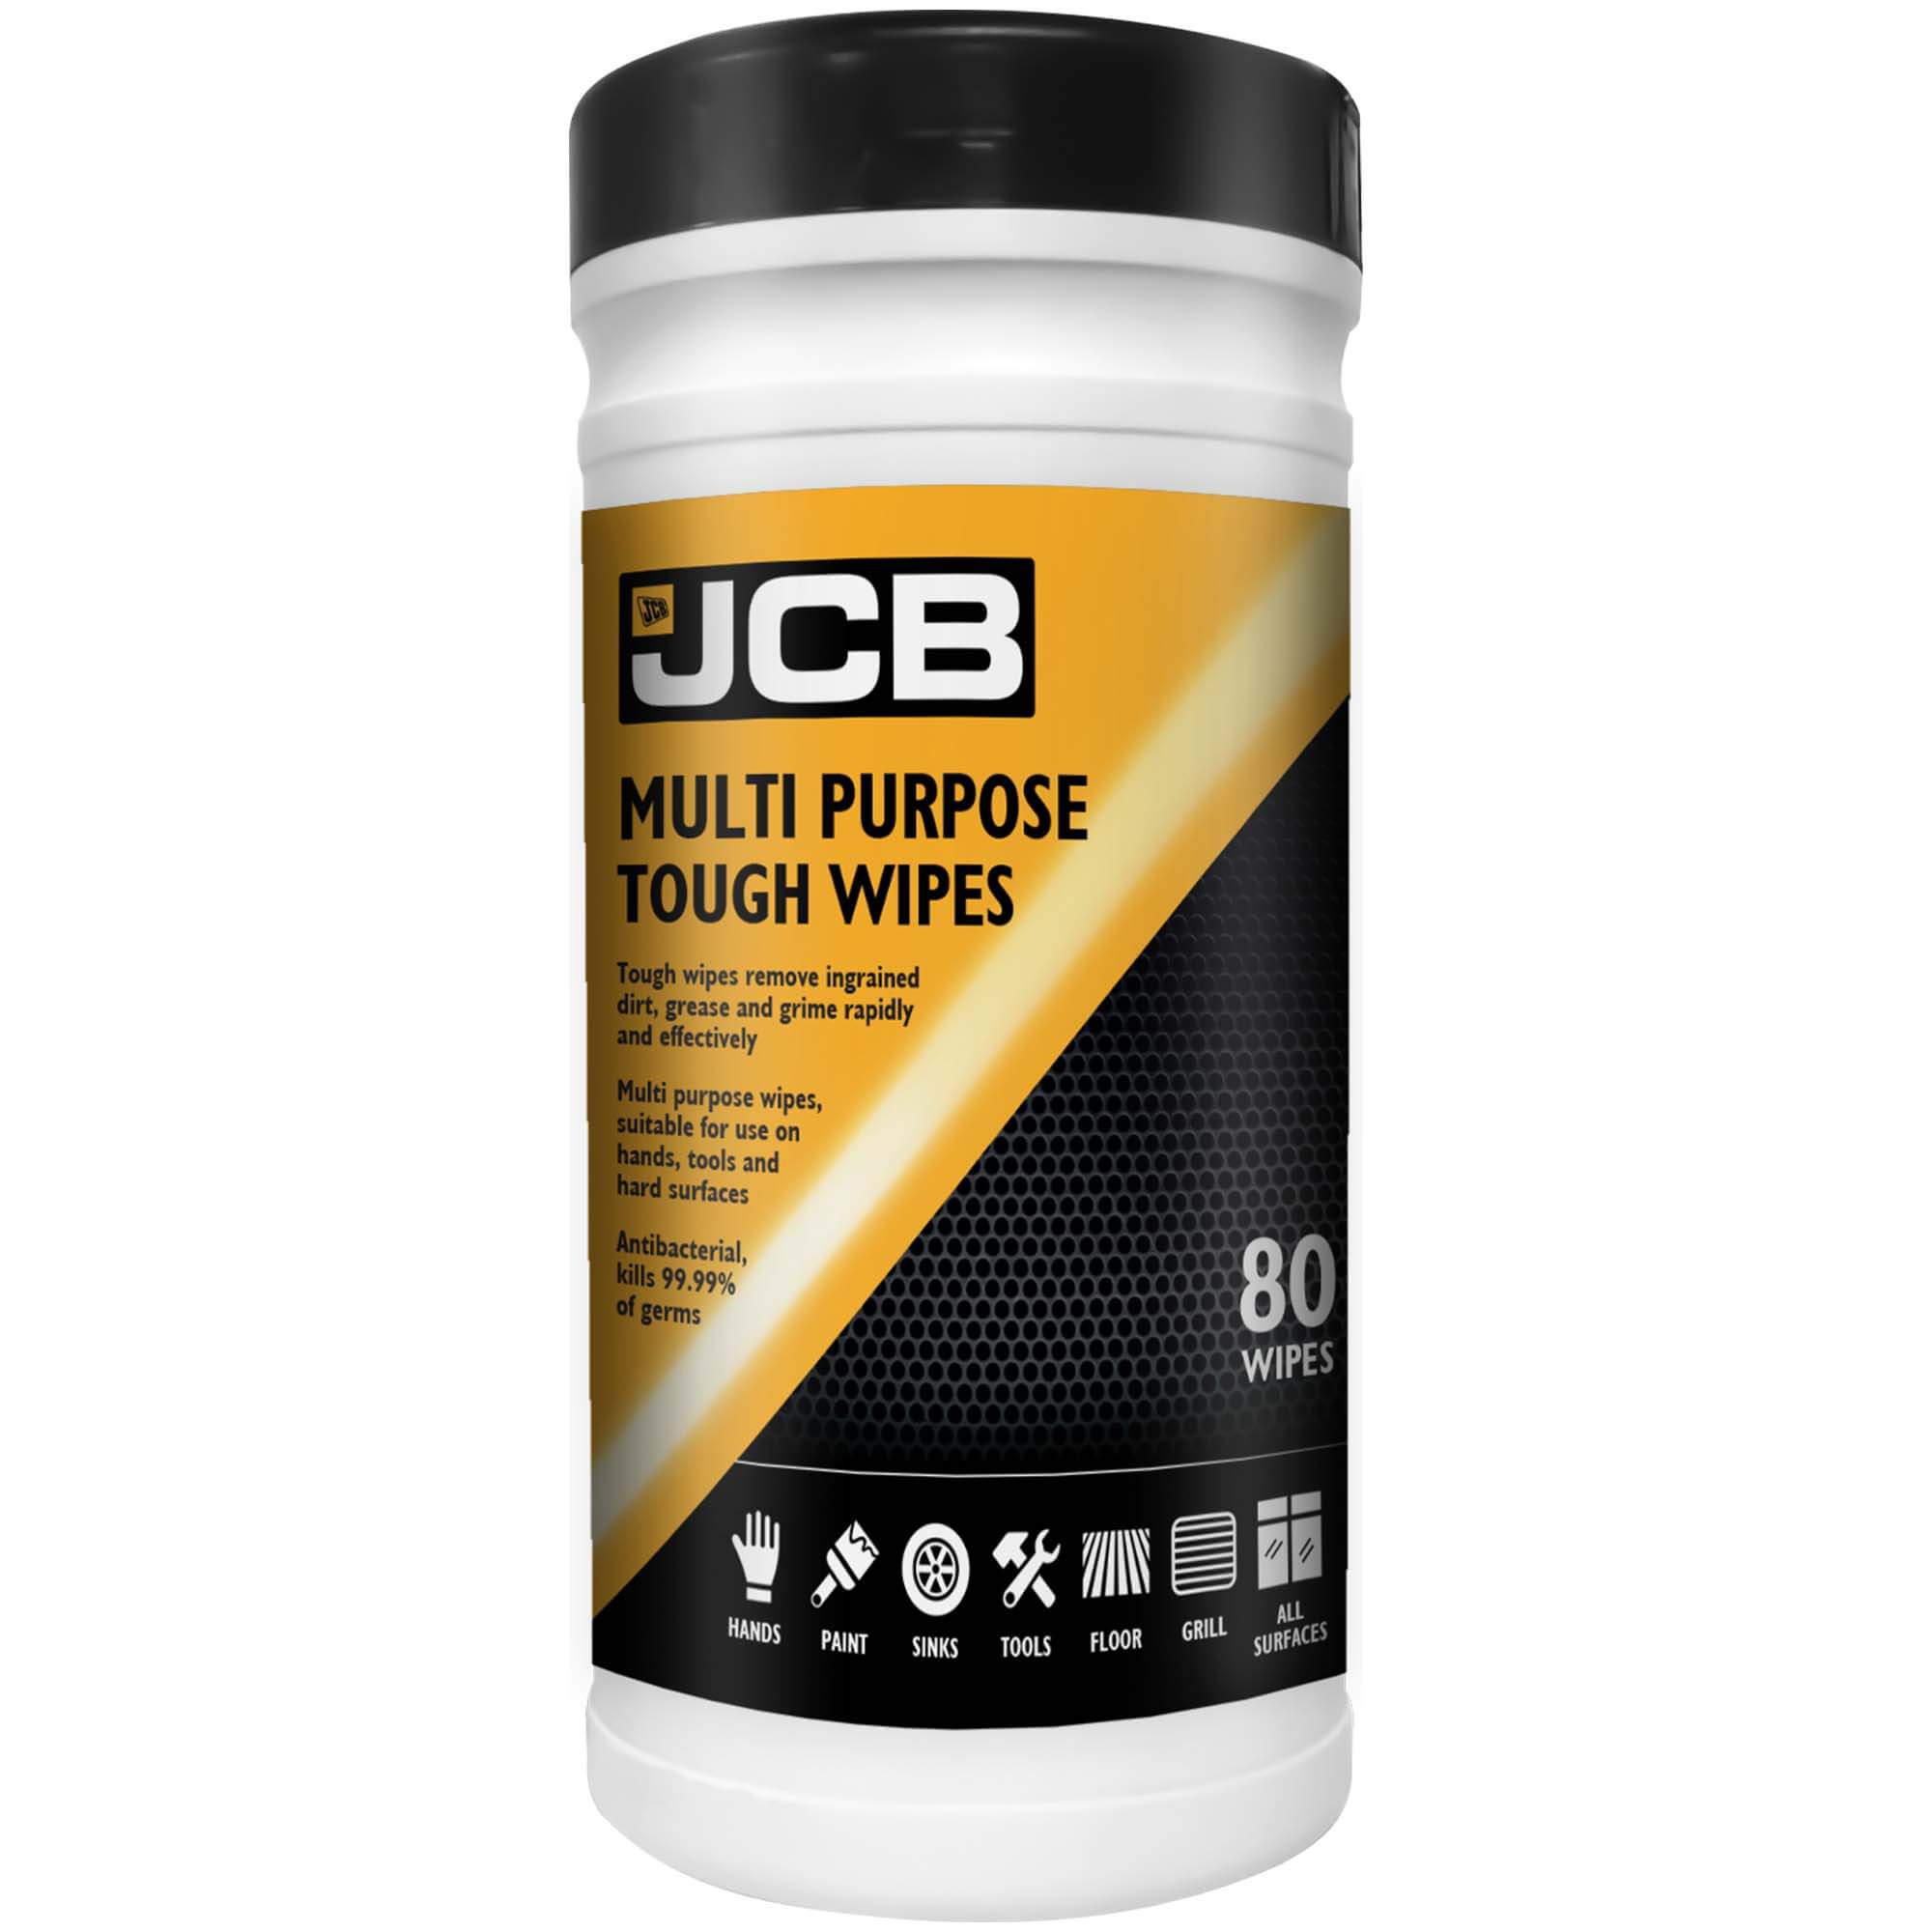 JCB Multi Purpose Tough Wipes (80 wipes)